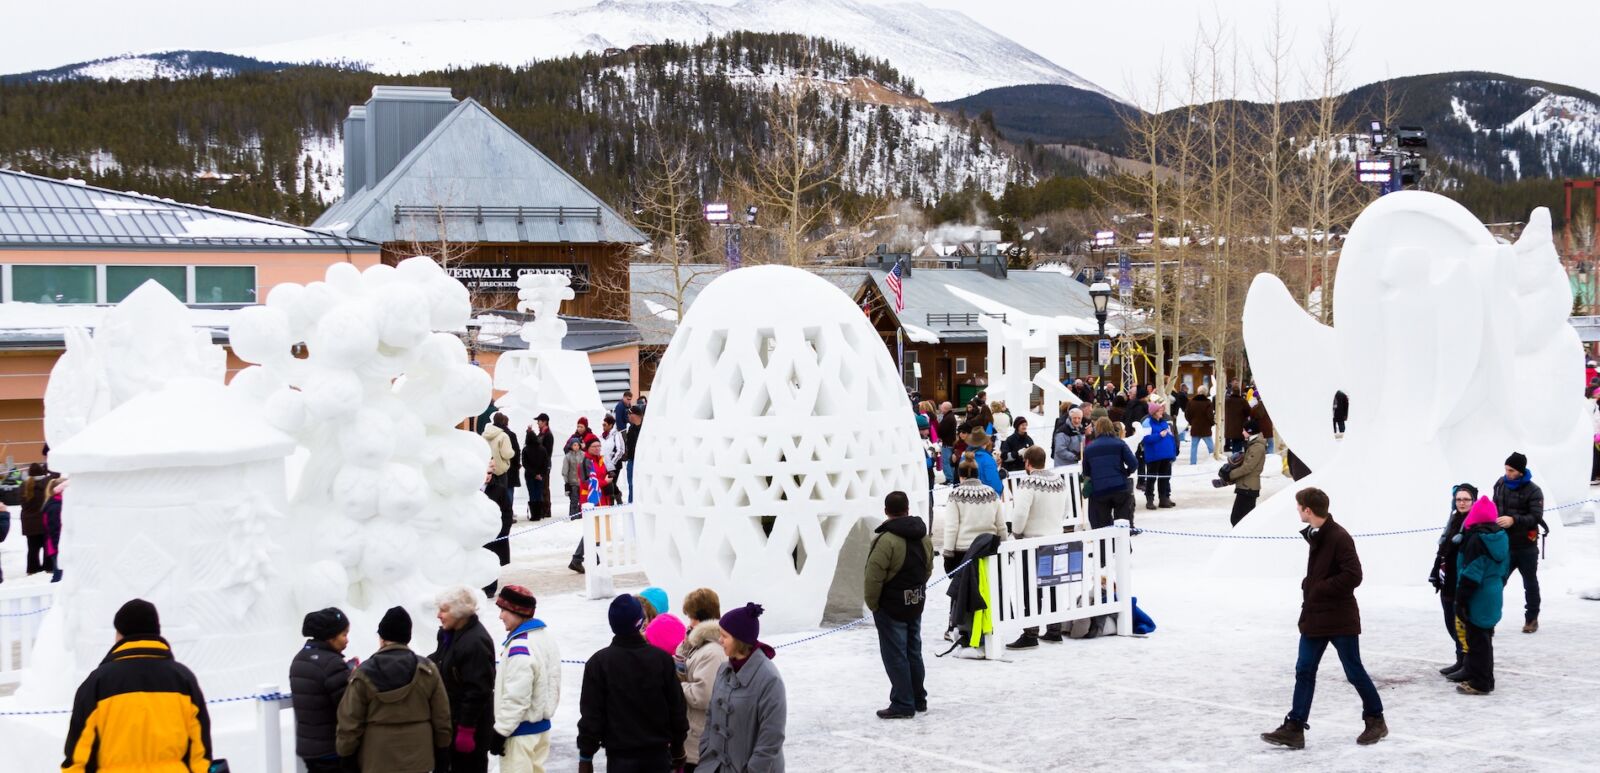 Snow Sculpture Championships in Breckenridge, Colorado.